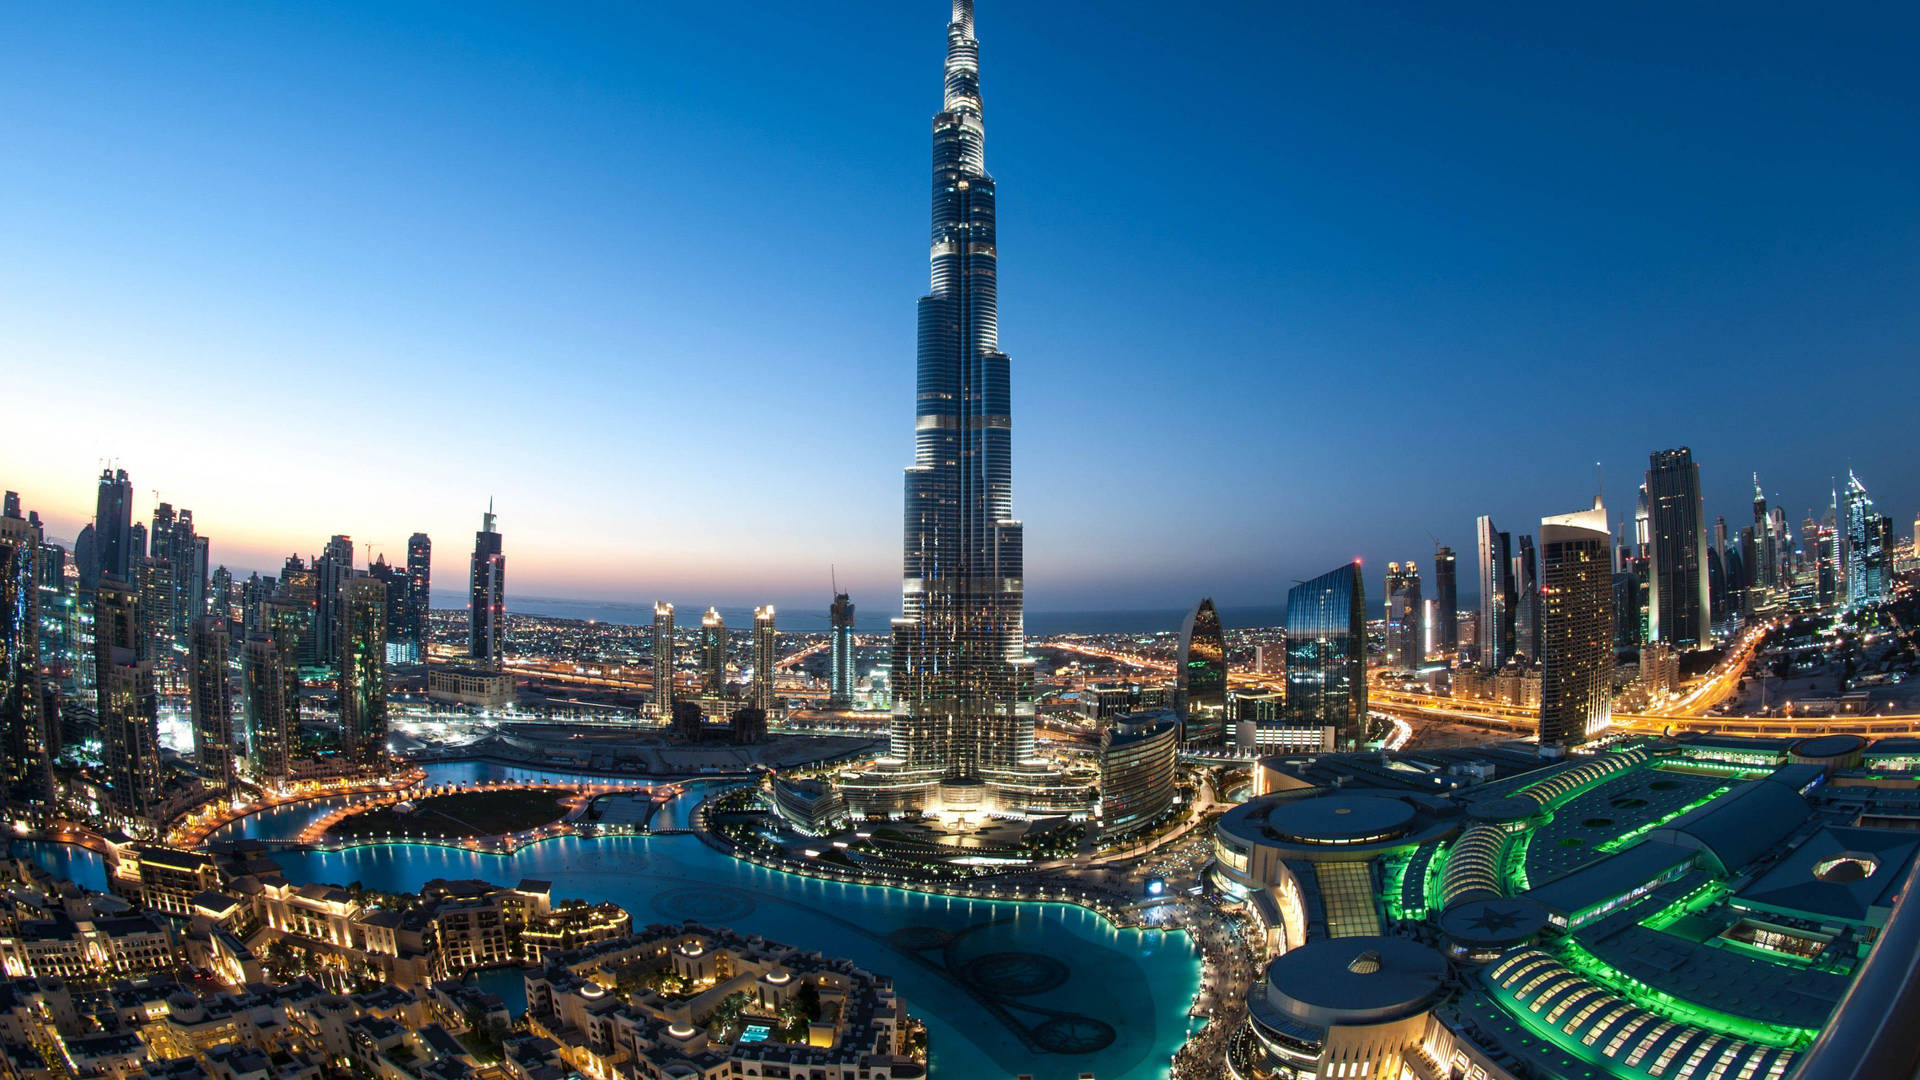 Download Burj Khalifa At Dusk, Dubai 4k Wallpaper 